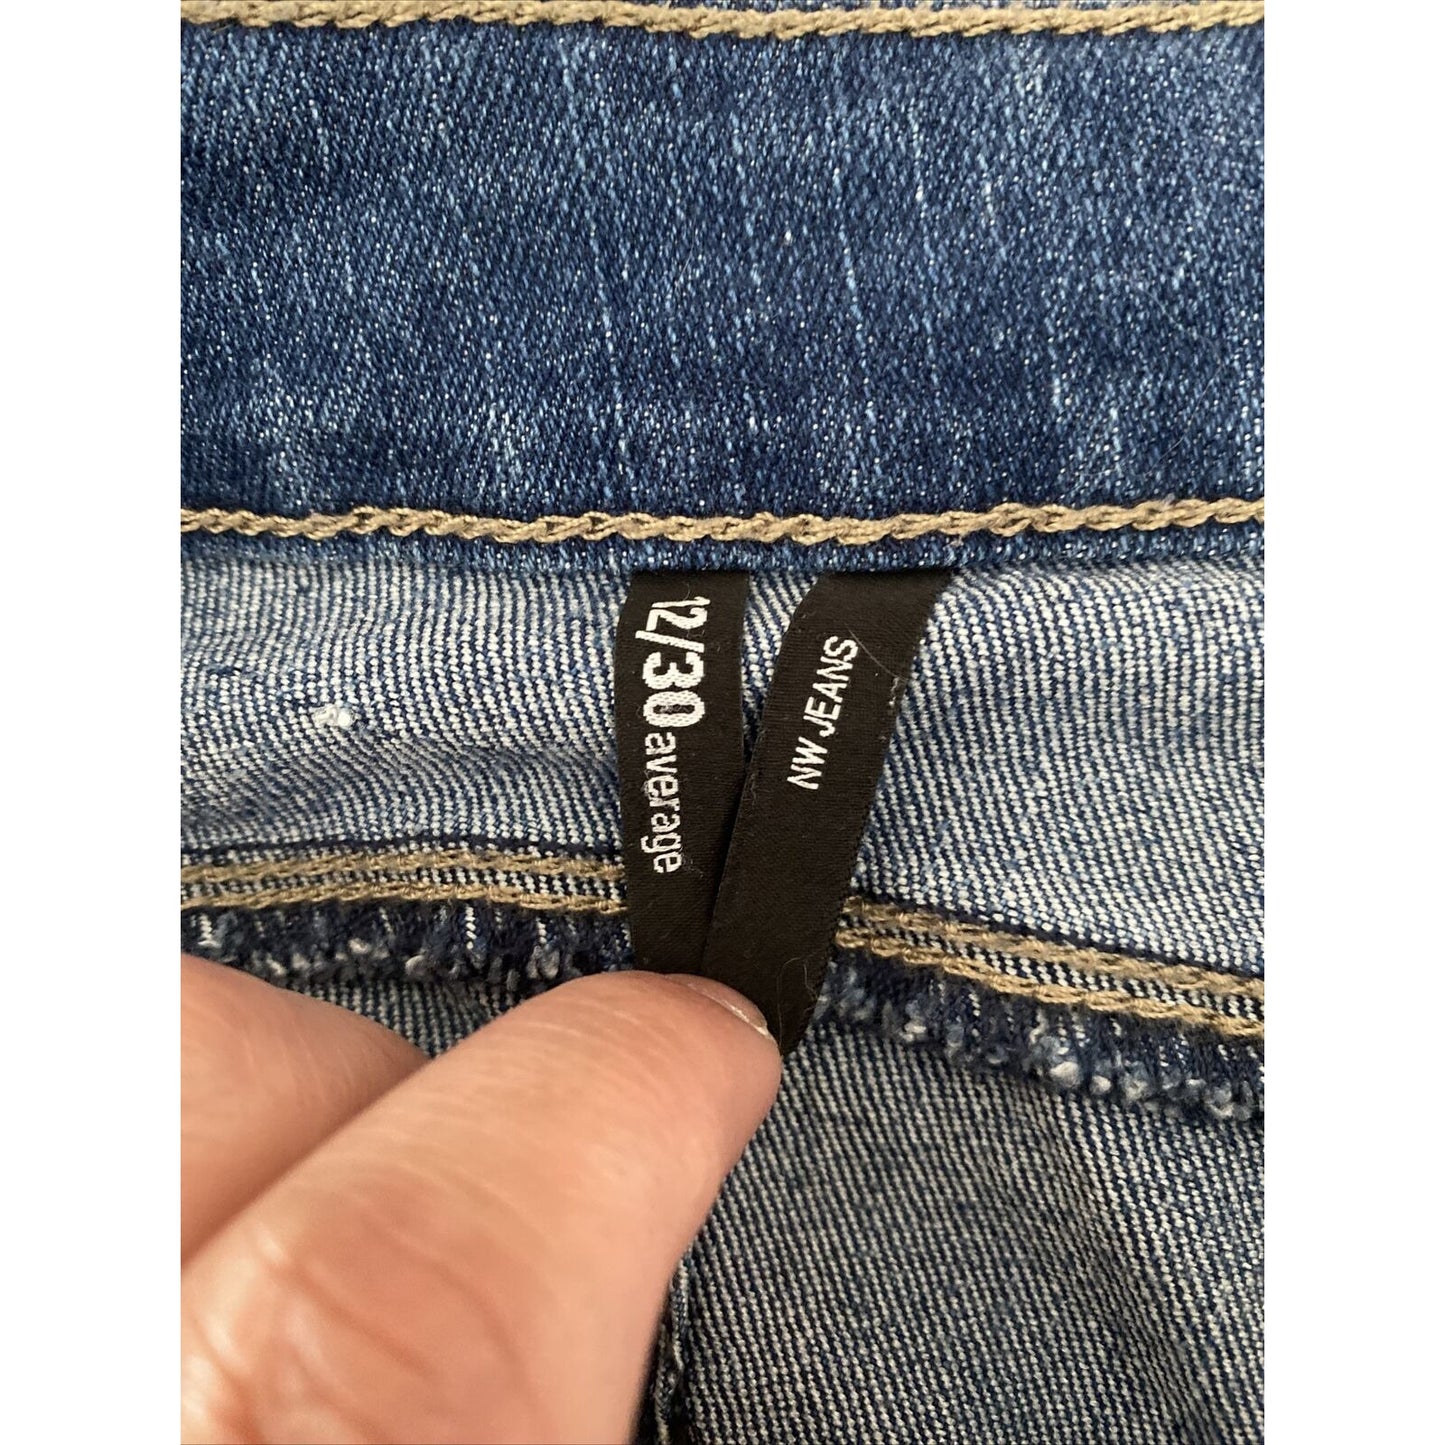 Nine West Women’s Size 12/30 Average Cotton Stretch Denim Capri Jeans